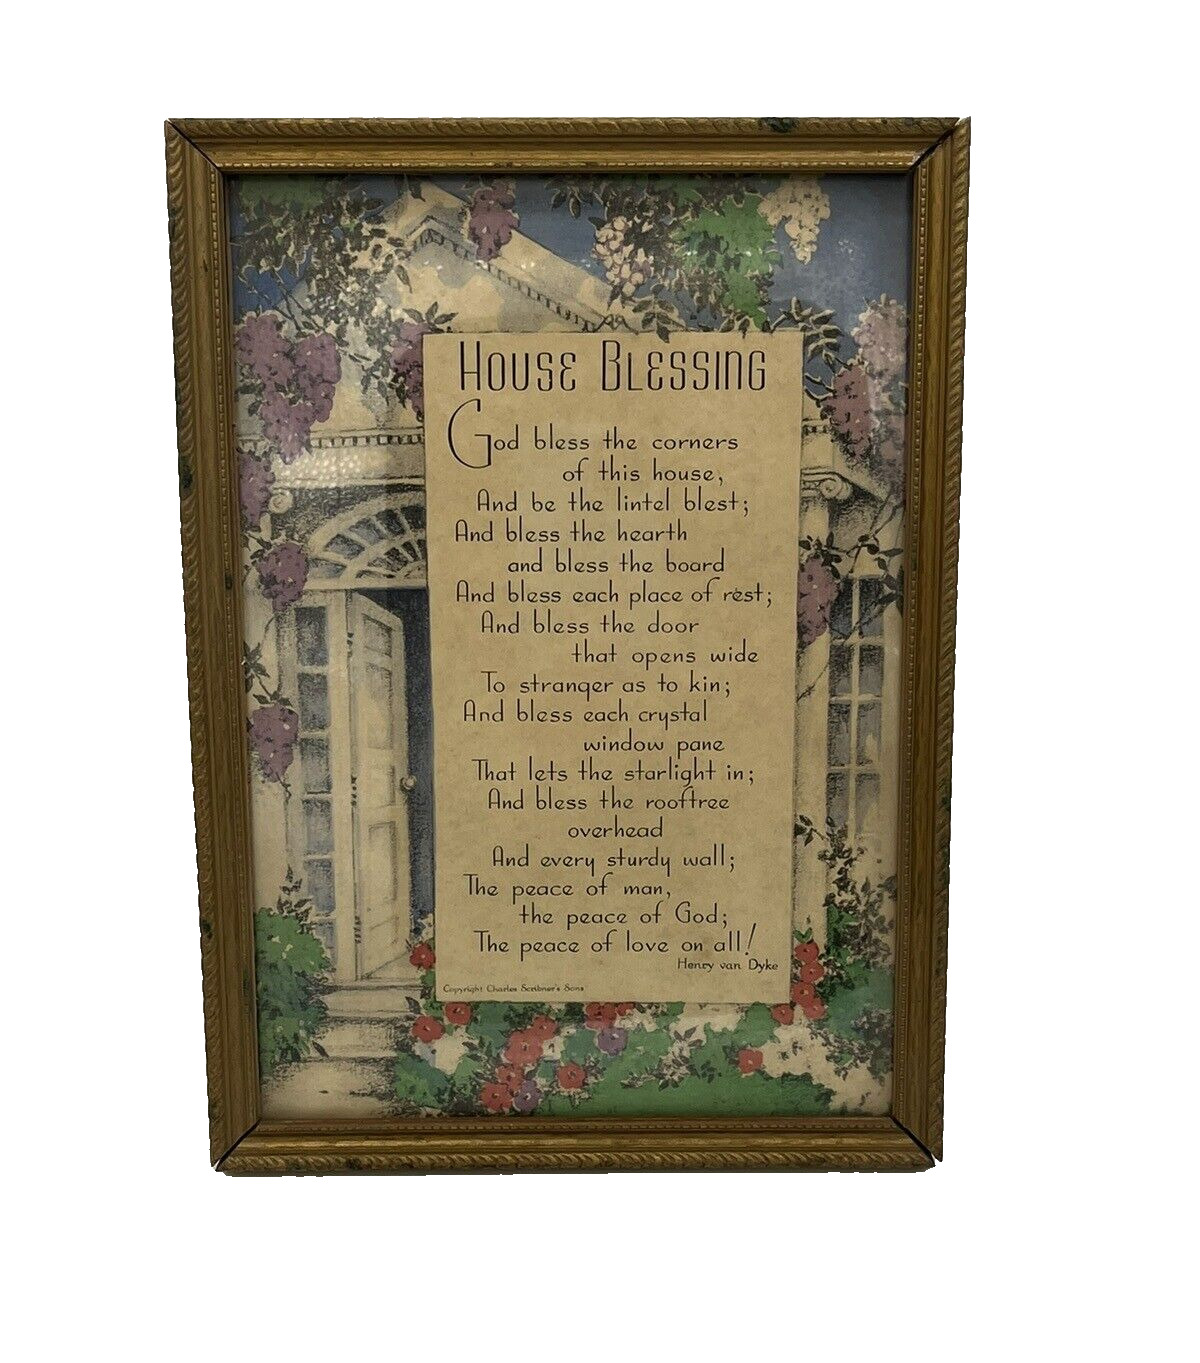 House Blessing Picture Christian Print Henry van Dyke Poem Vintage Wood Frame